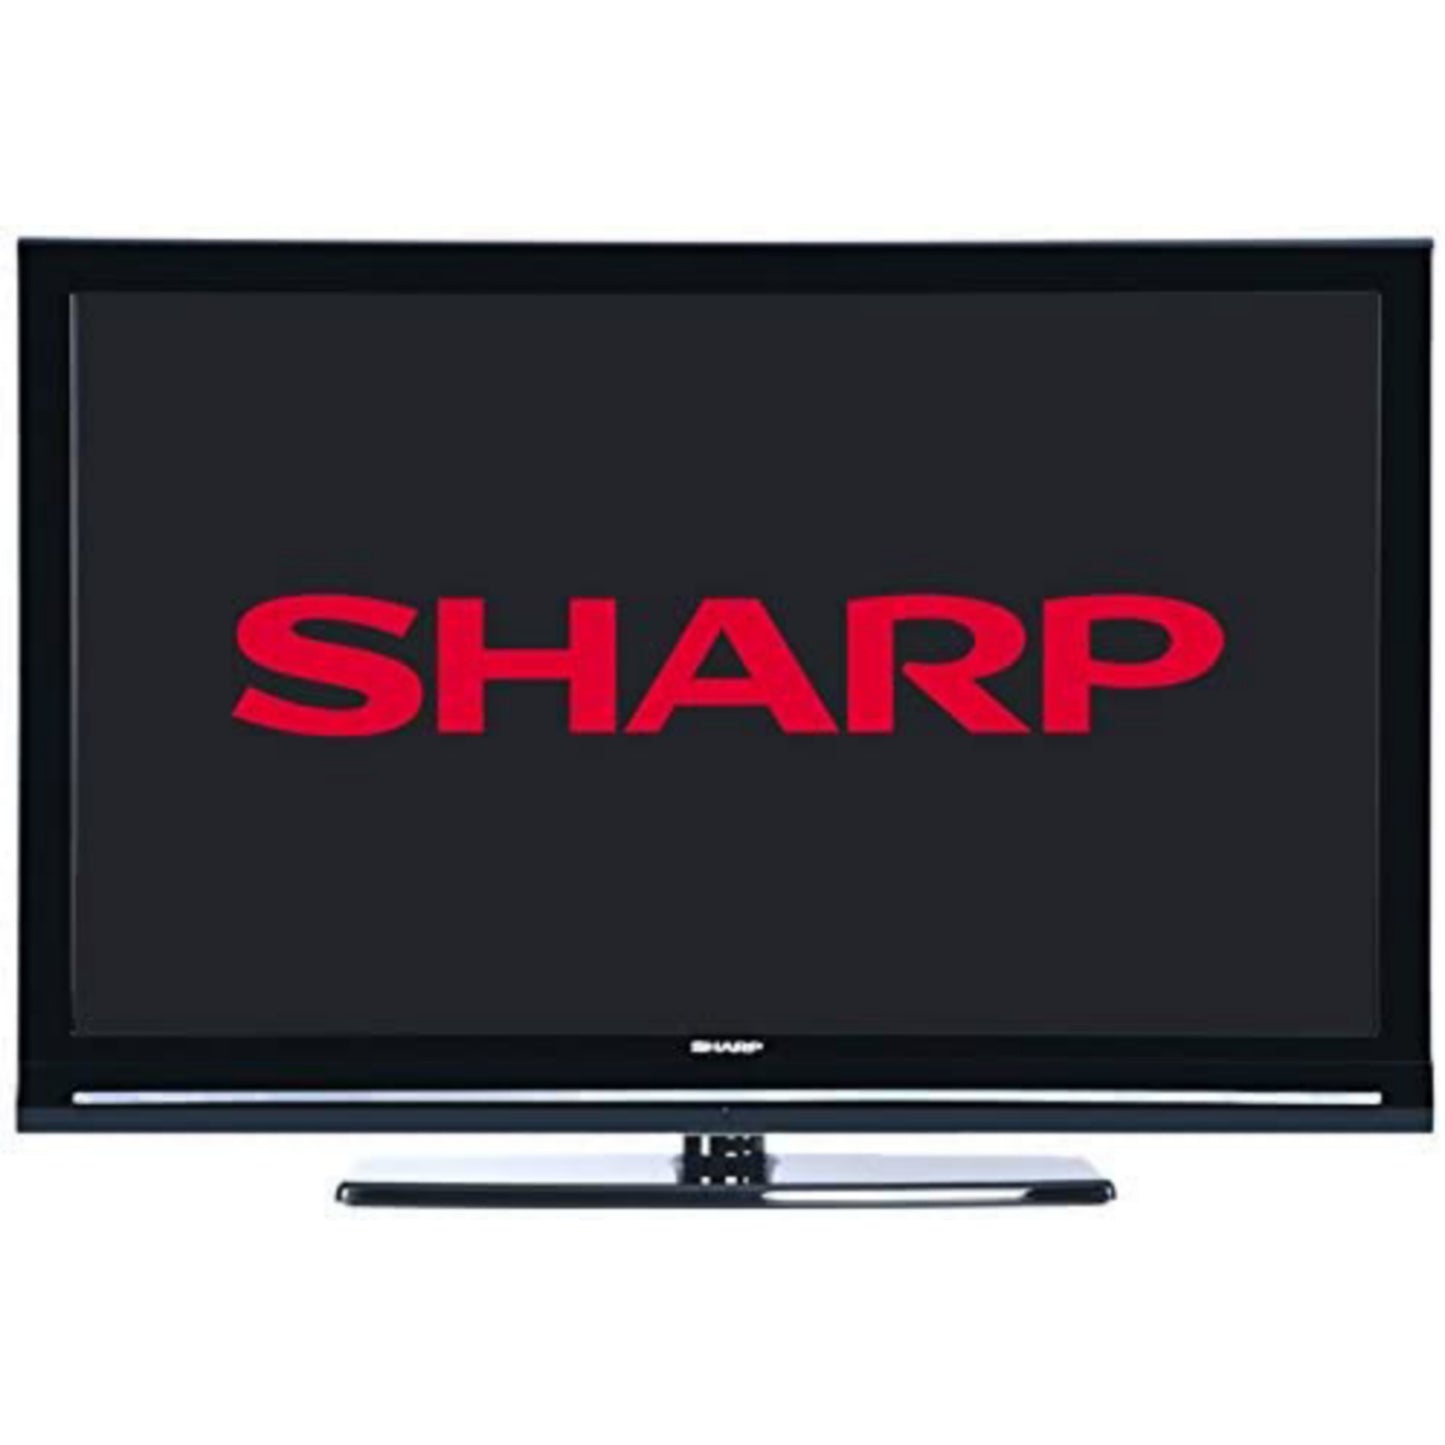 SHARP 22 Inch HD Ready LCD TV - London Used